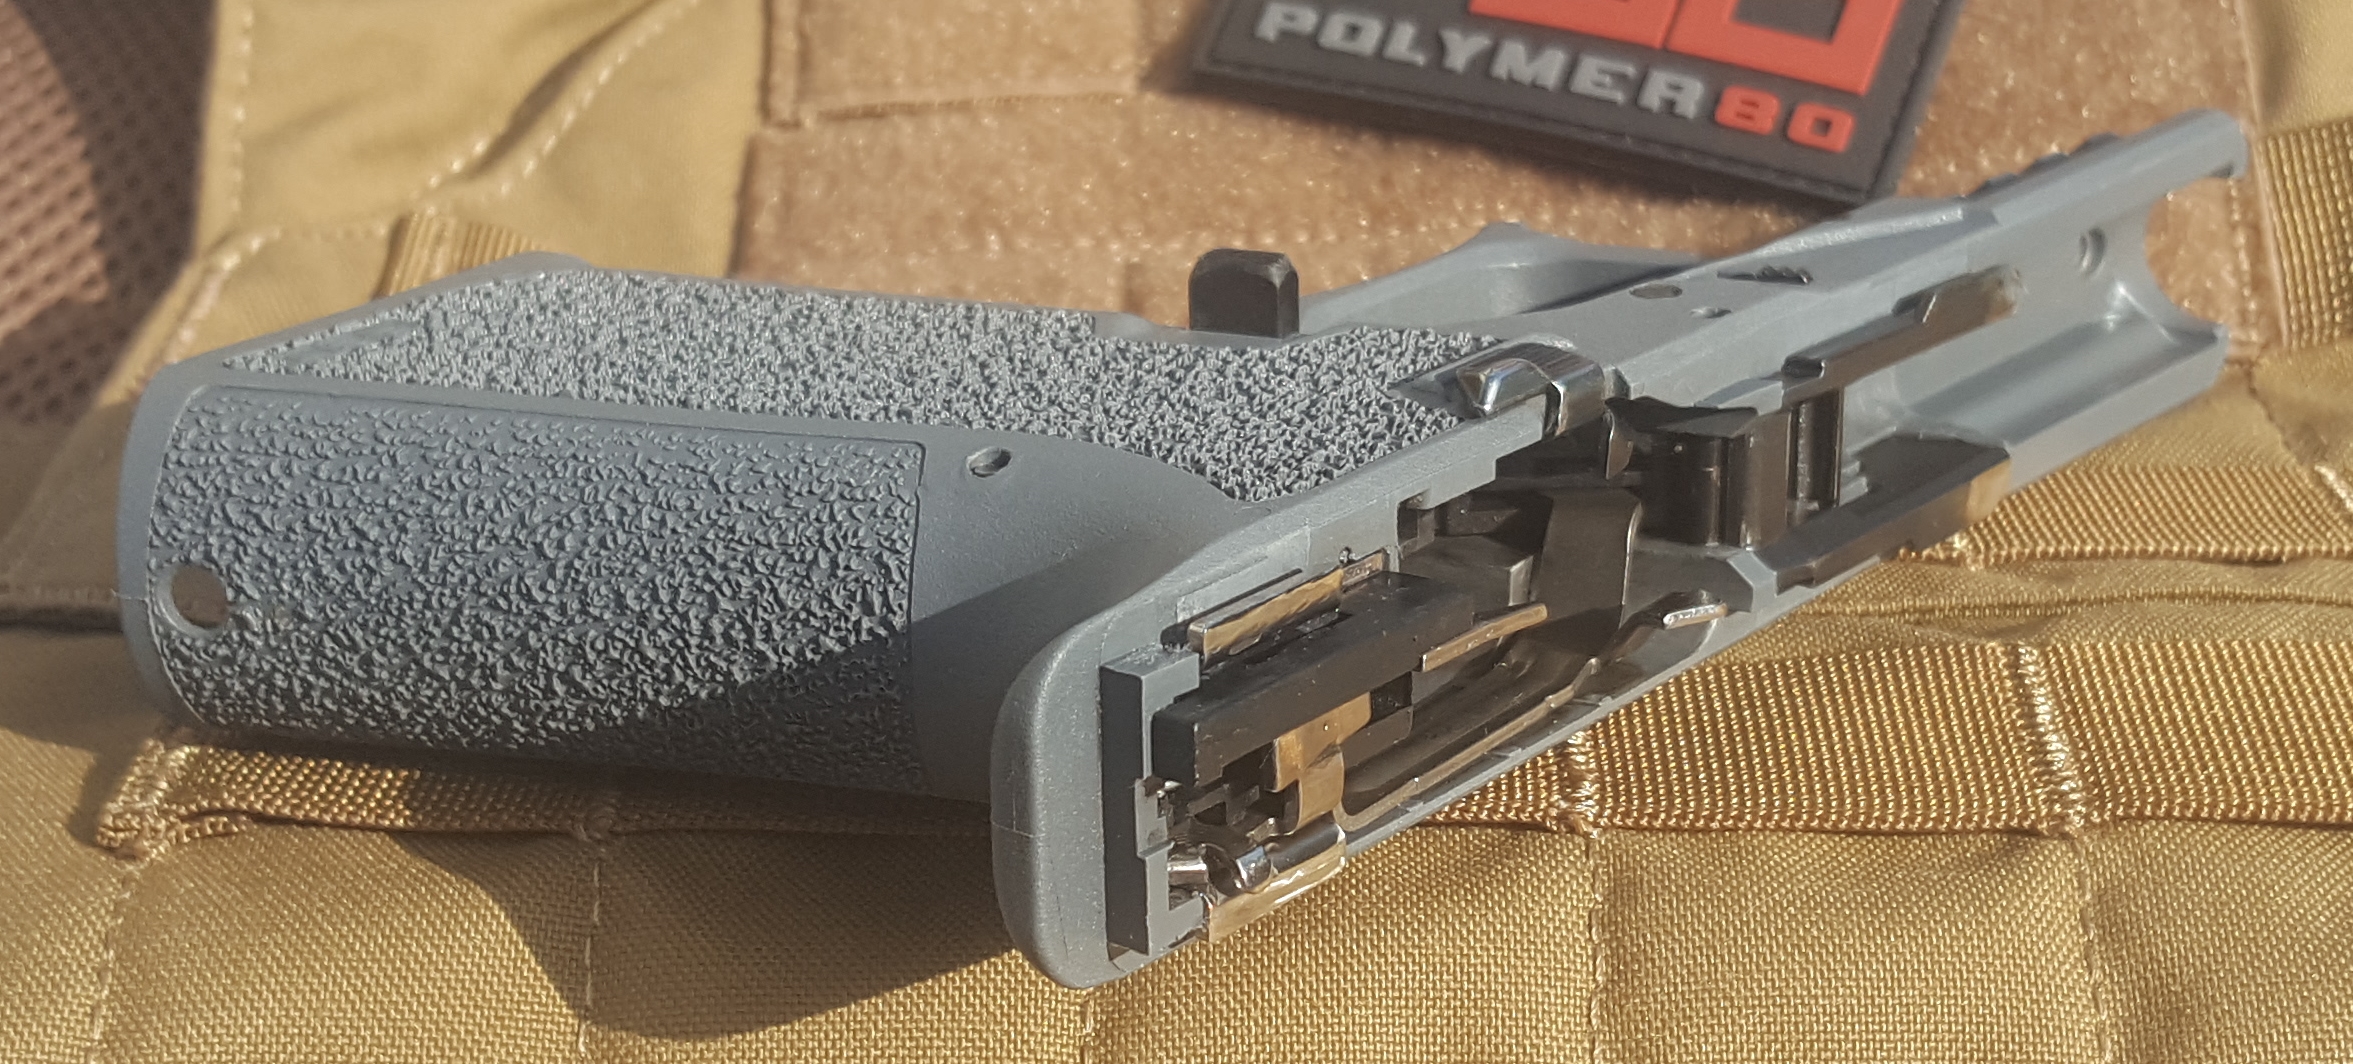 Polymer 80 Pf940c Firearms Insider Community